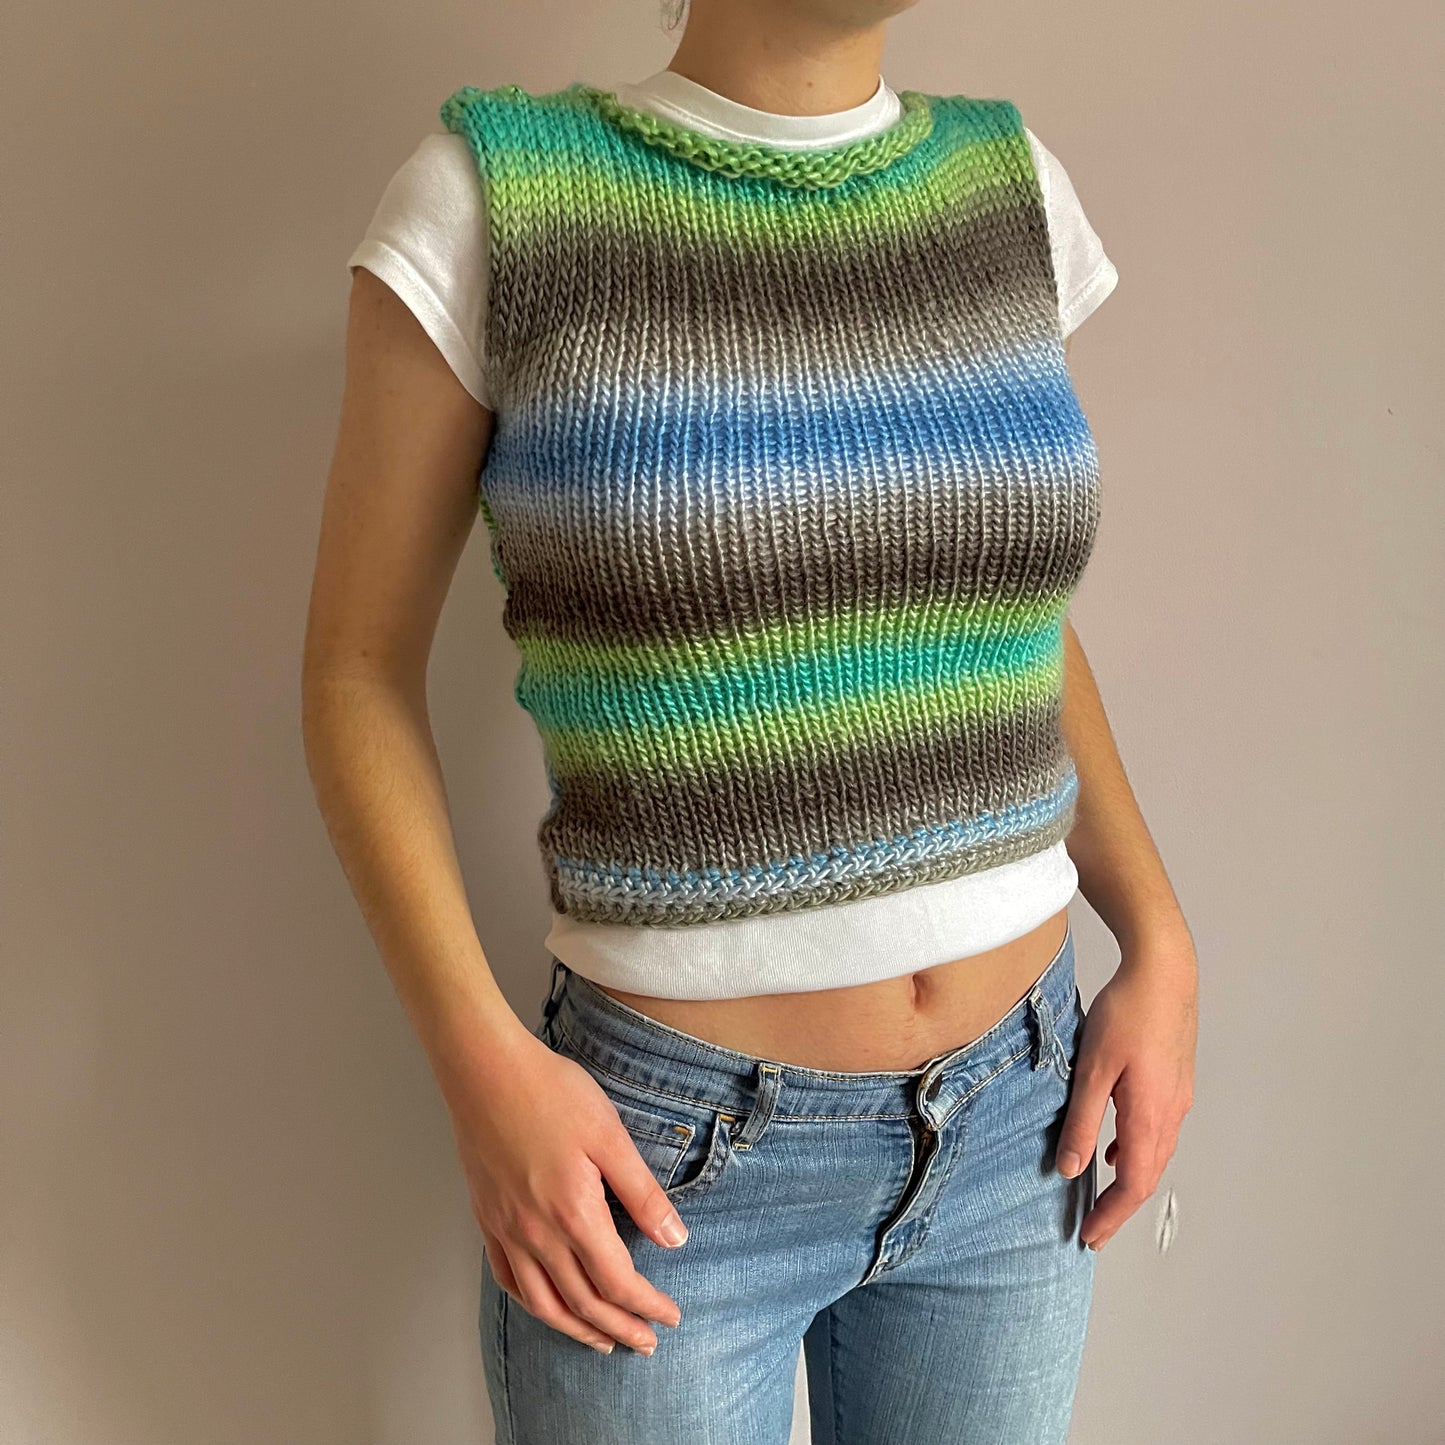 The Ocean Shades Vest - handmade knitted sweater vest